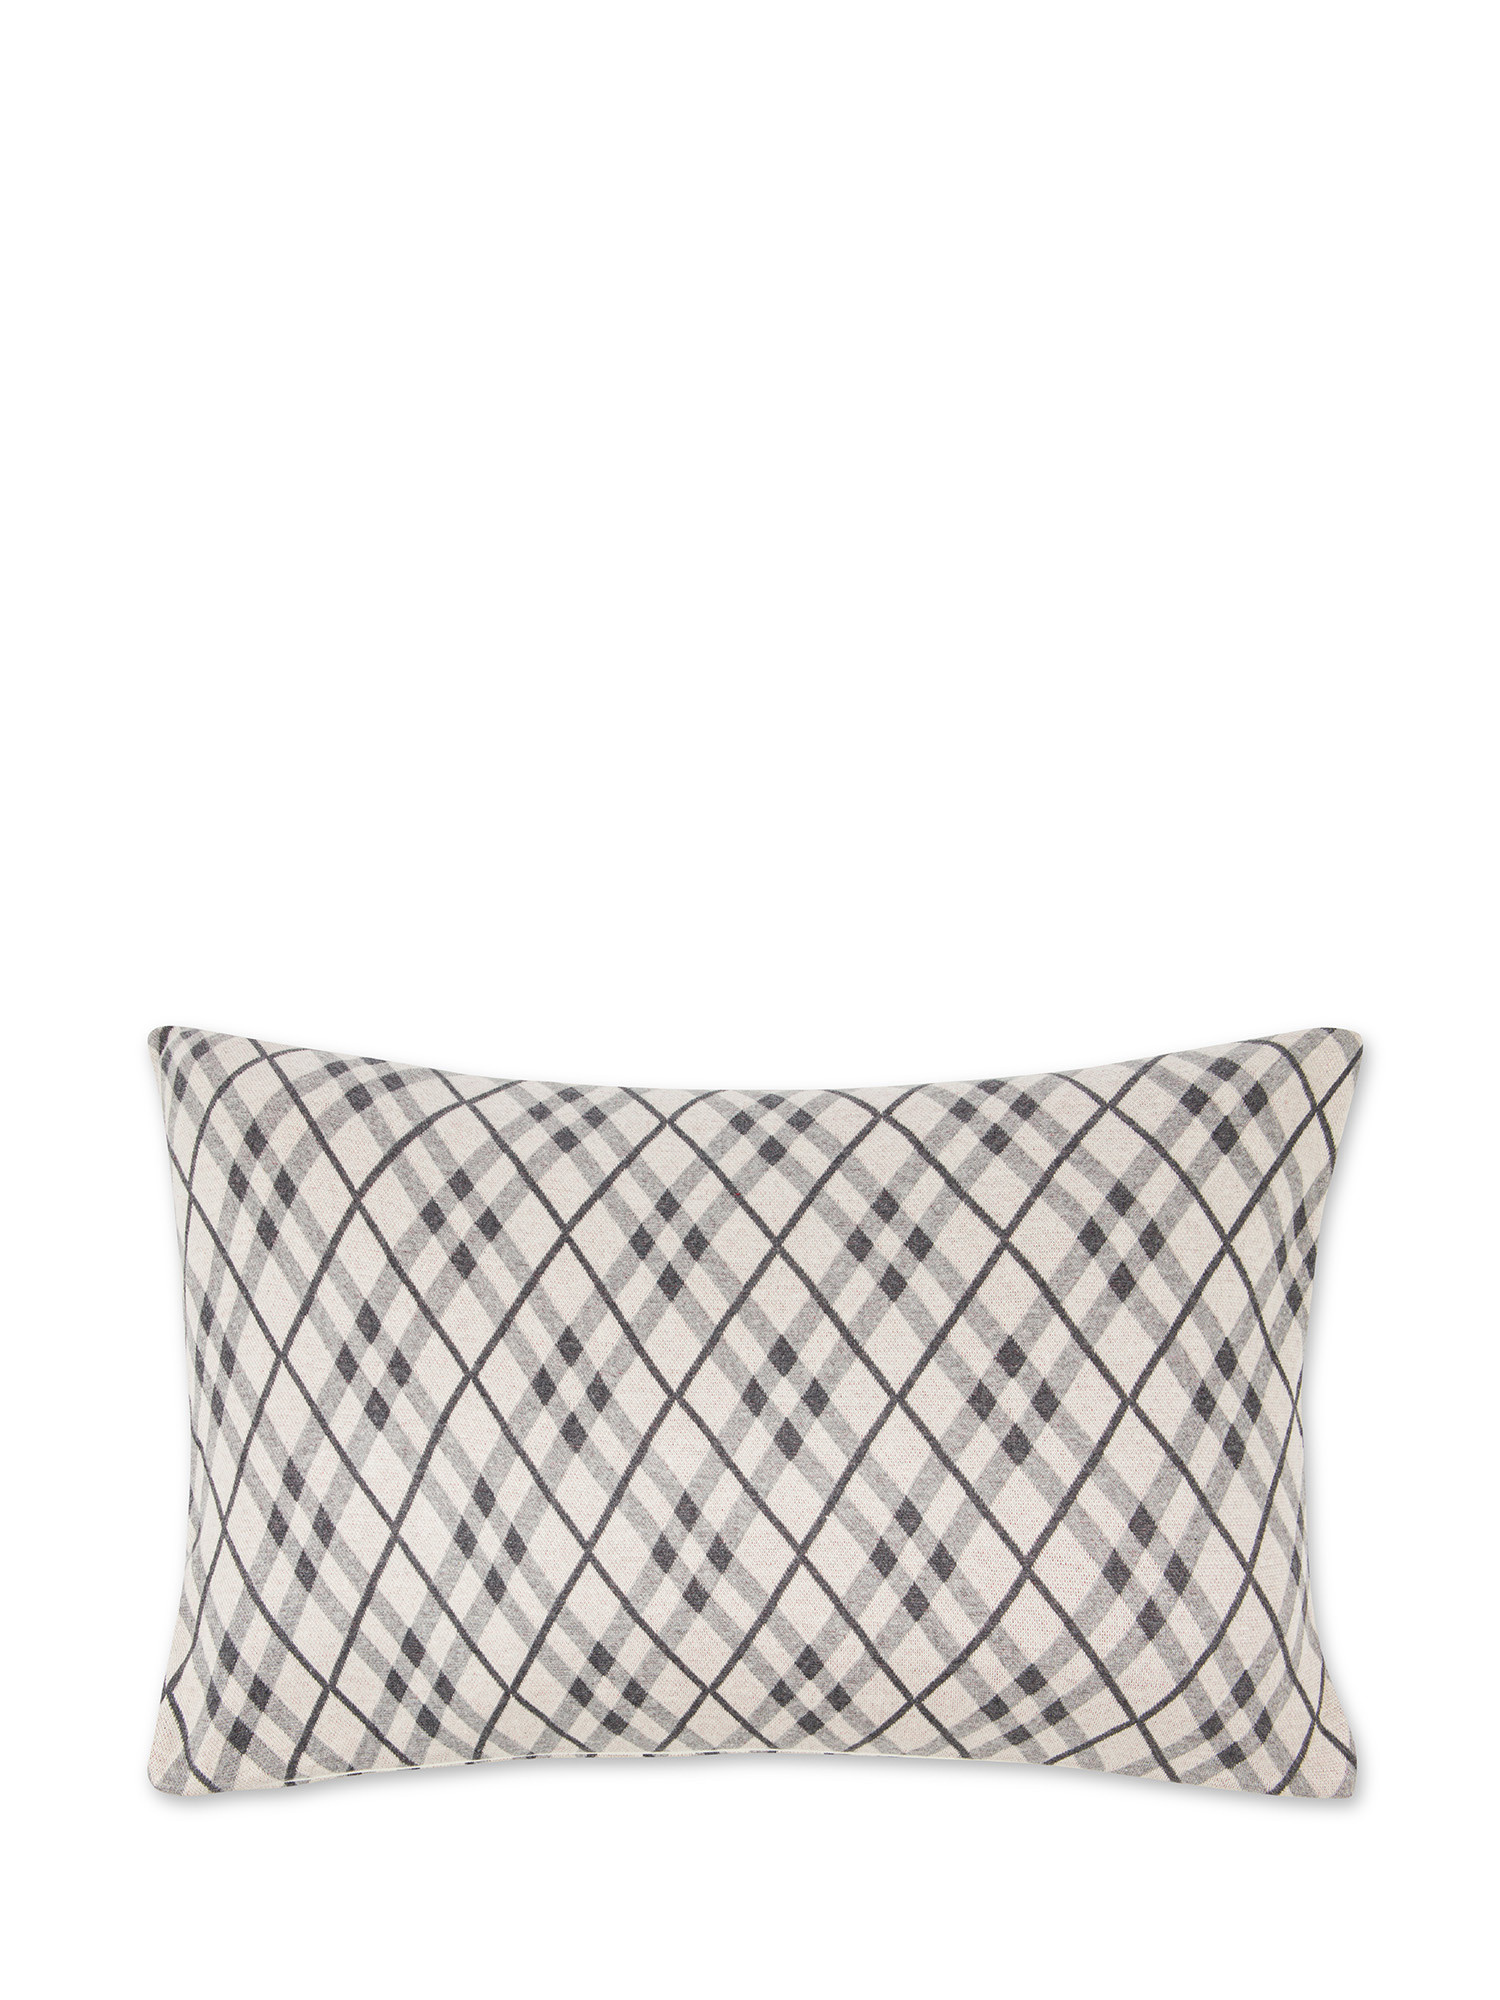 Jacquard knitted cushion 40x60cm, Grey, large image number 1